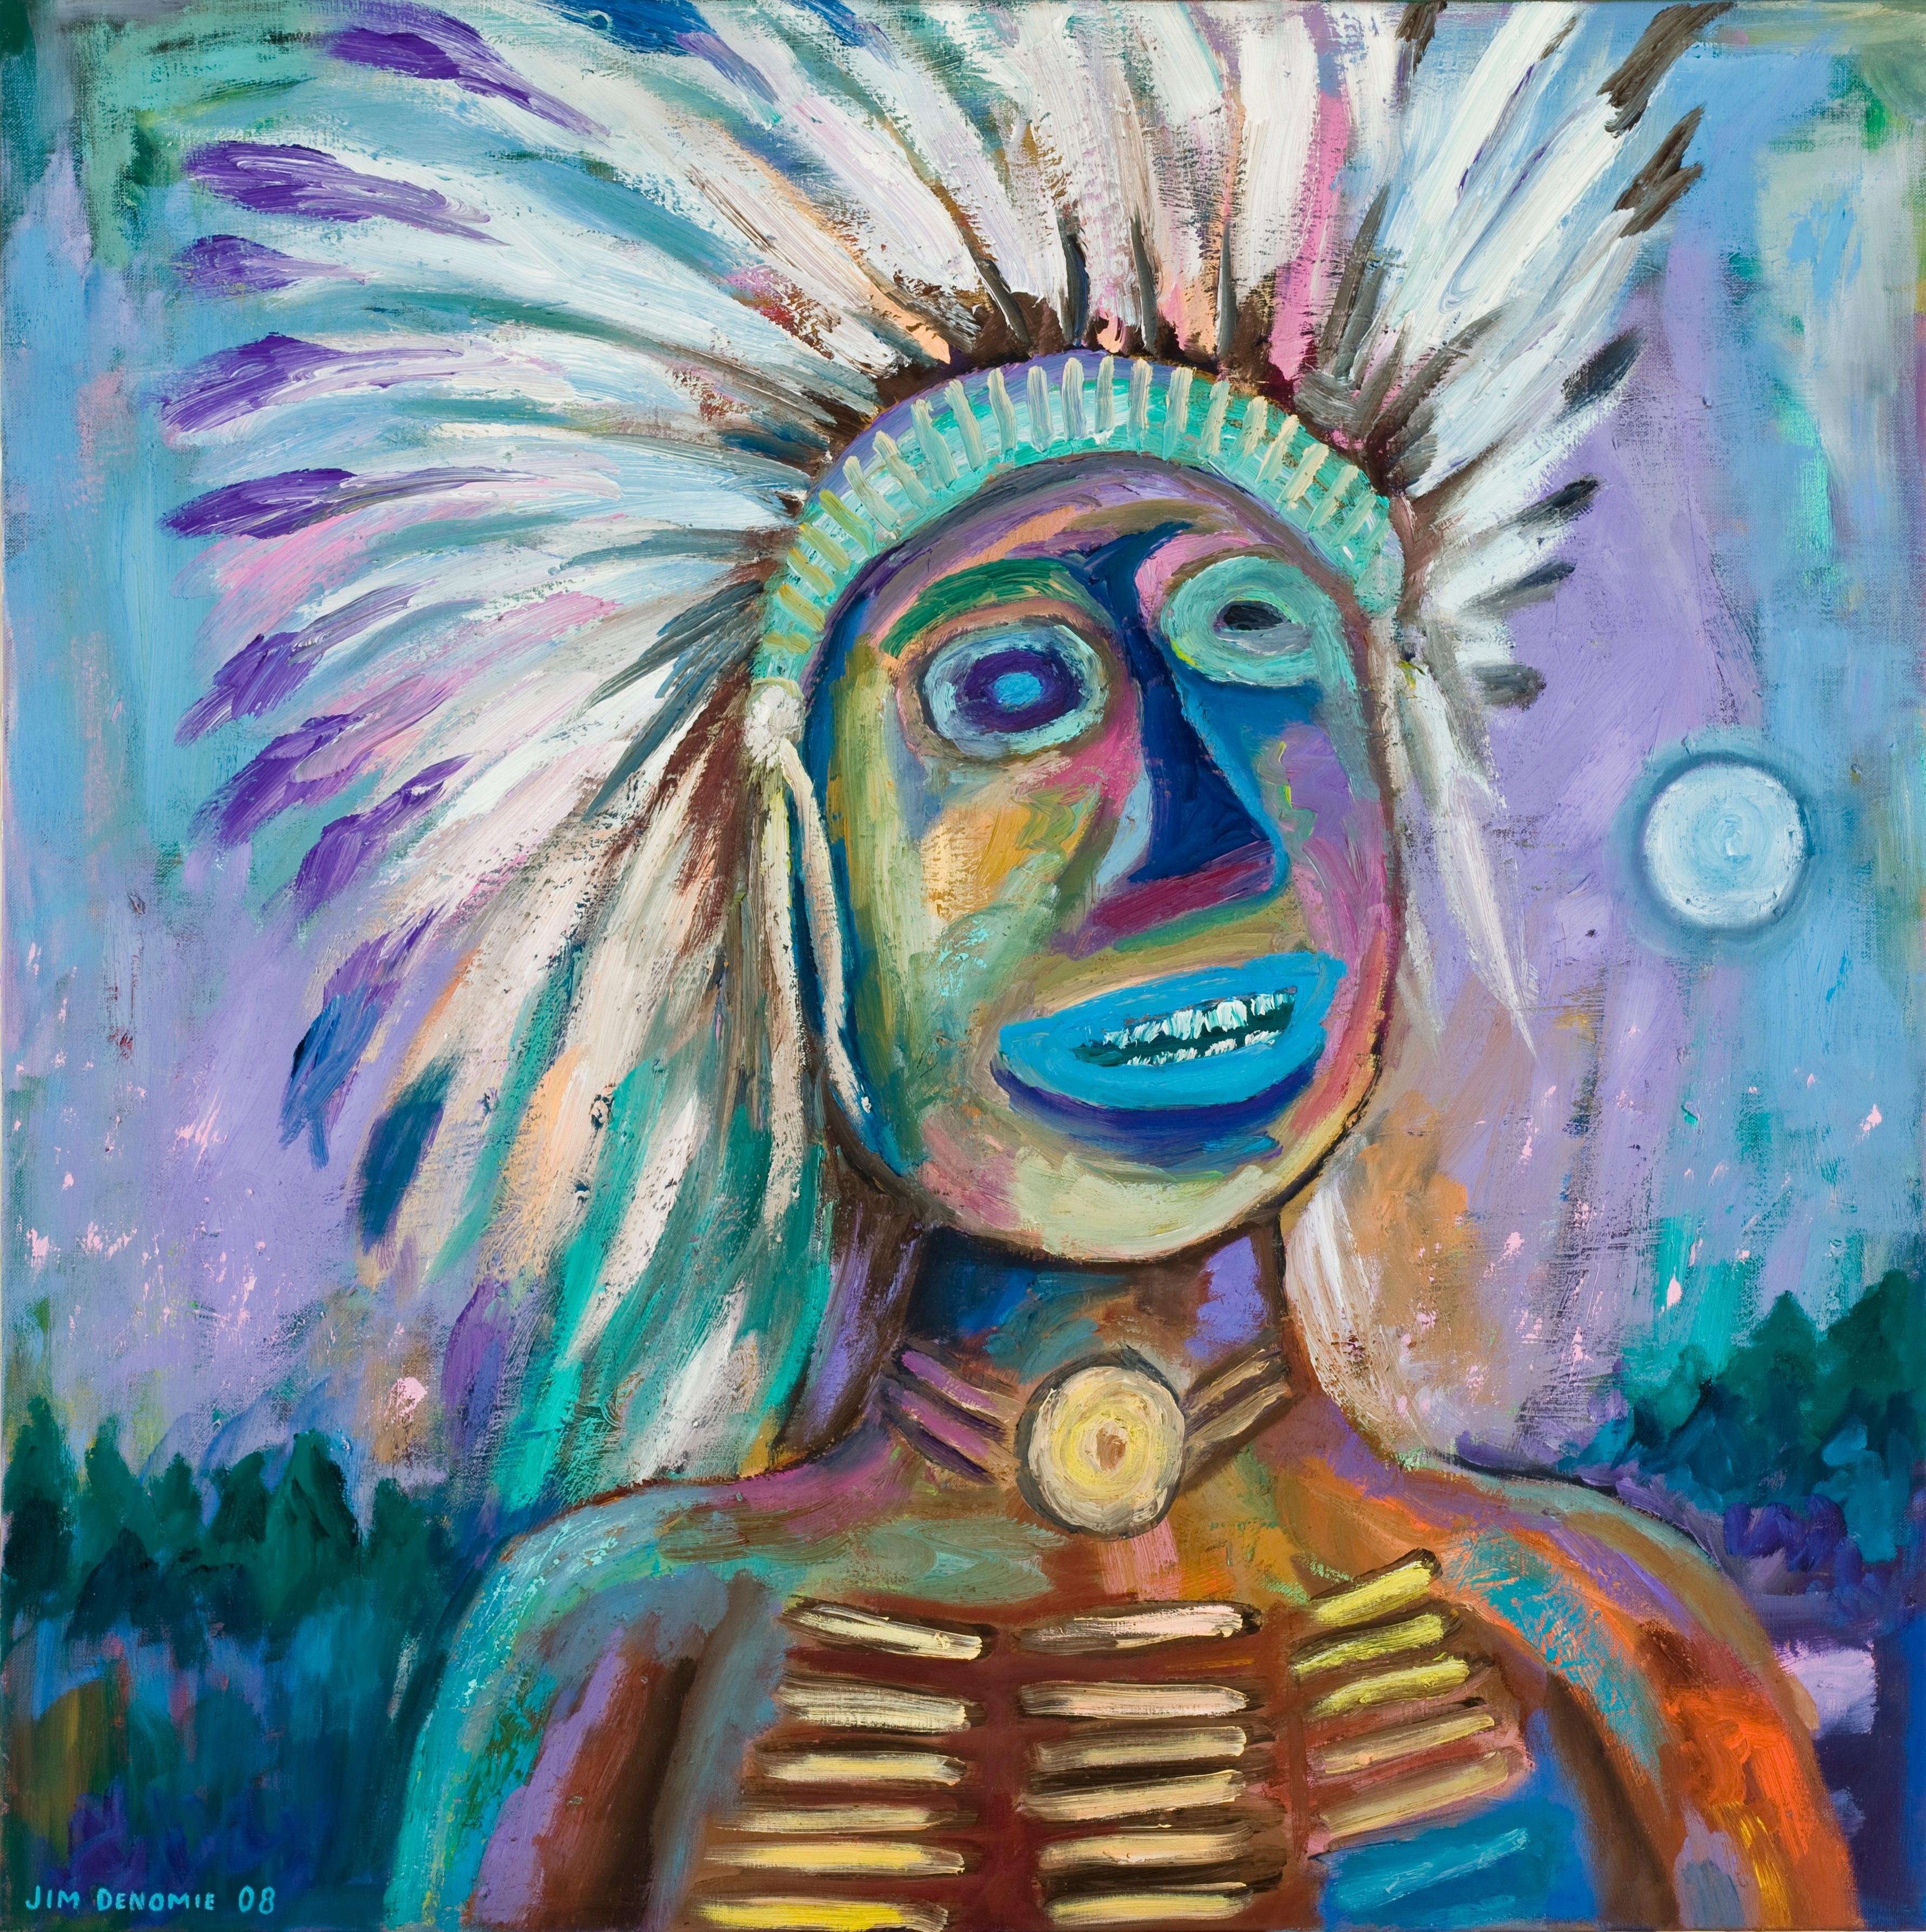 Jim Denomie's "Blue Eyed Chief", 2008.